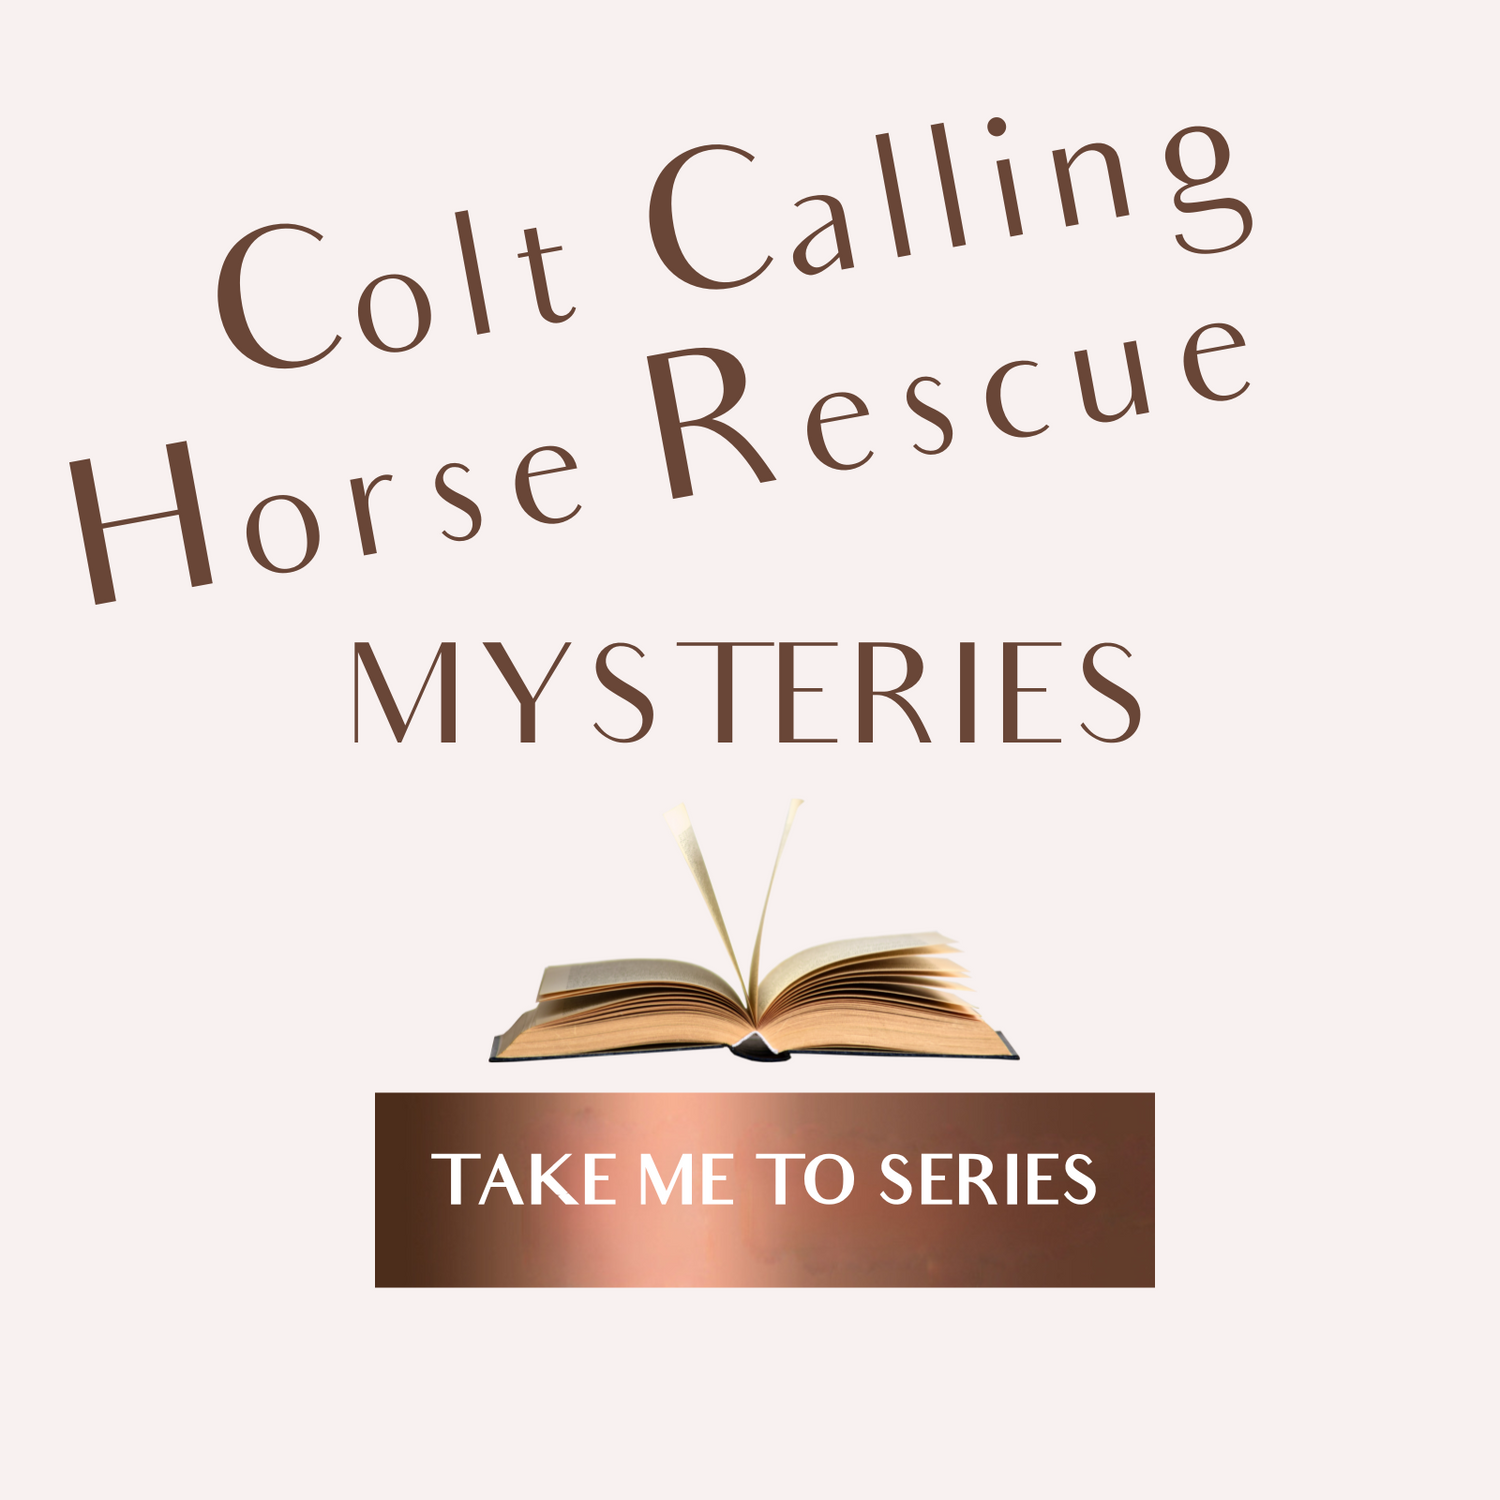 Colt Calling Horse Rescue Mysteries PAPERBACKS